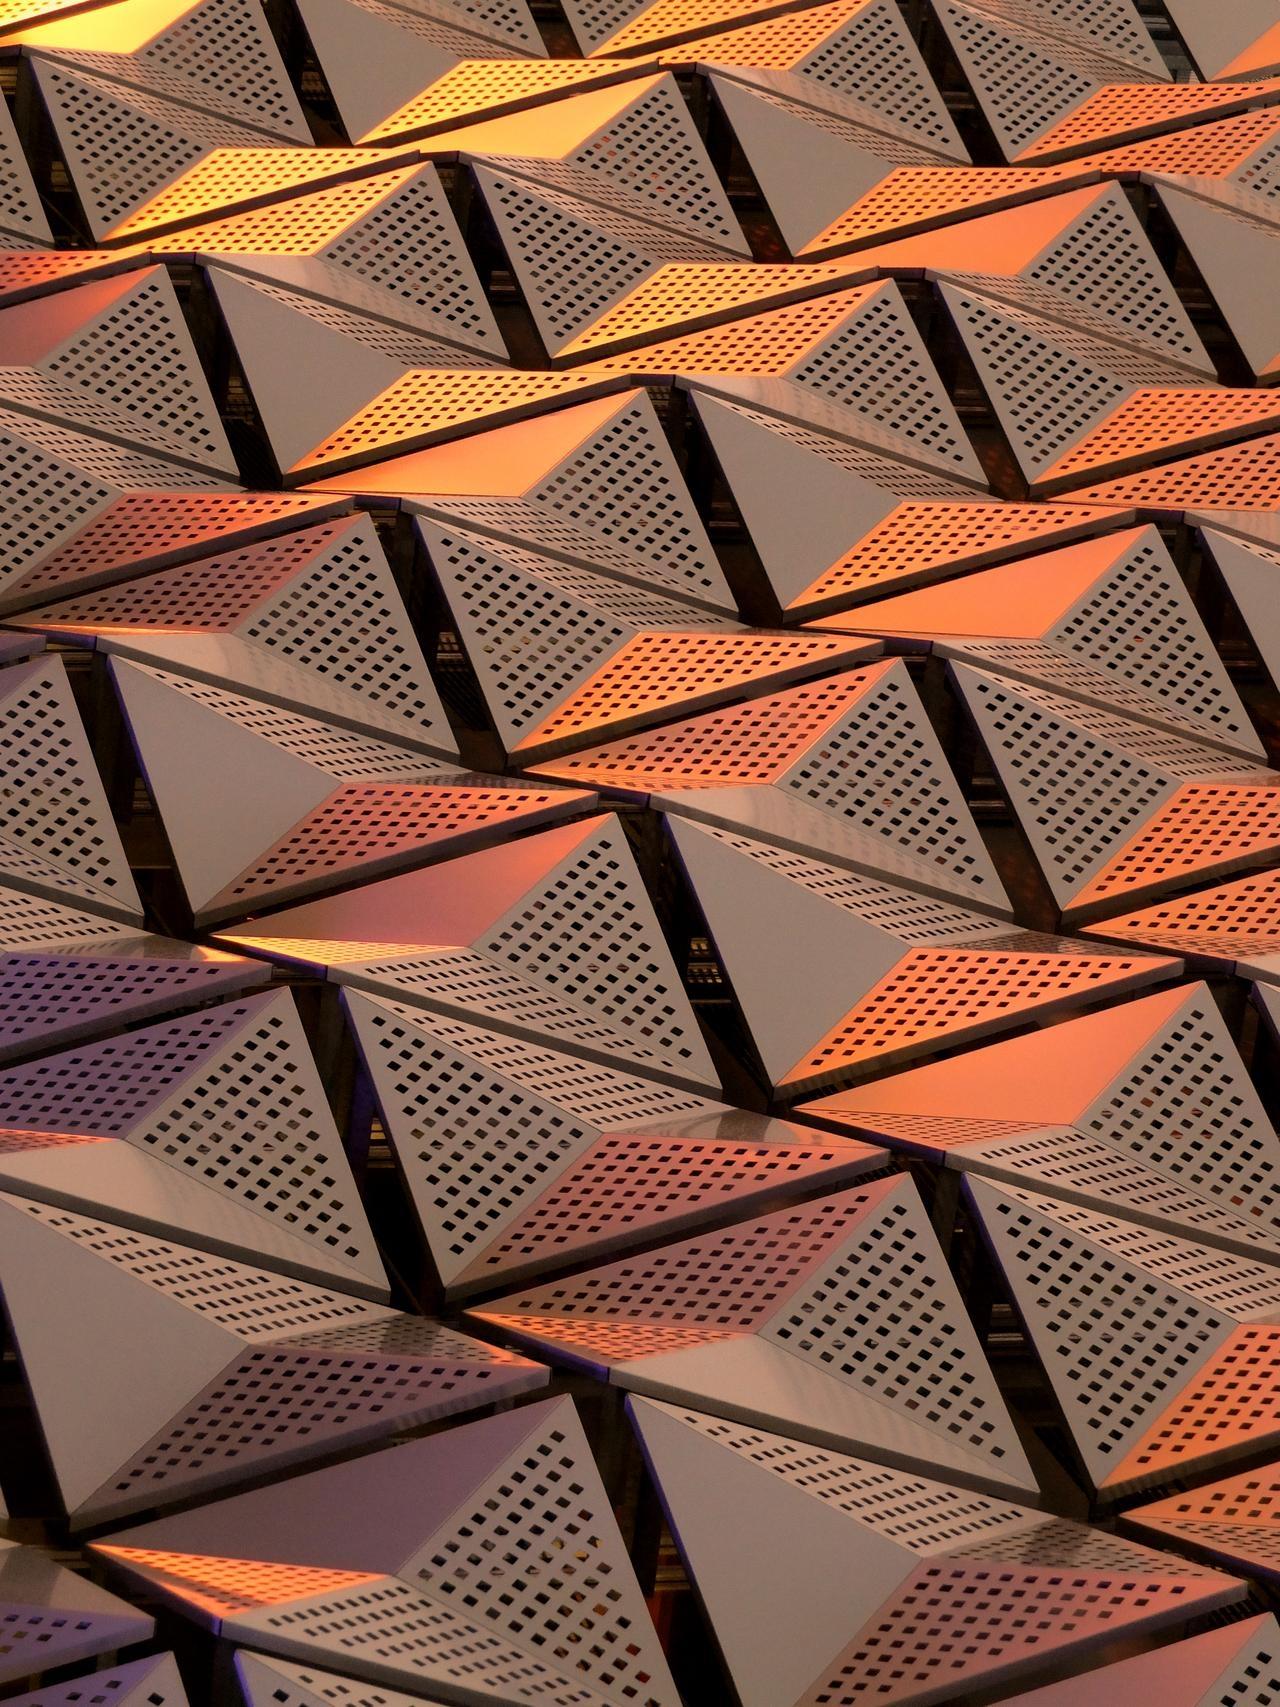 Metallic geometric cladding or panels in copper